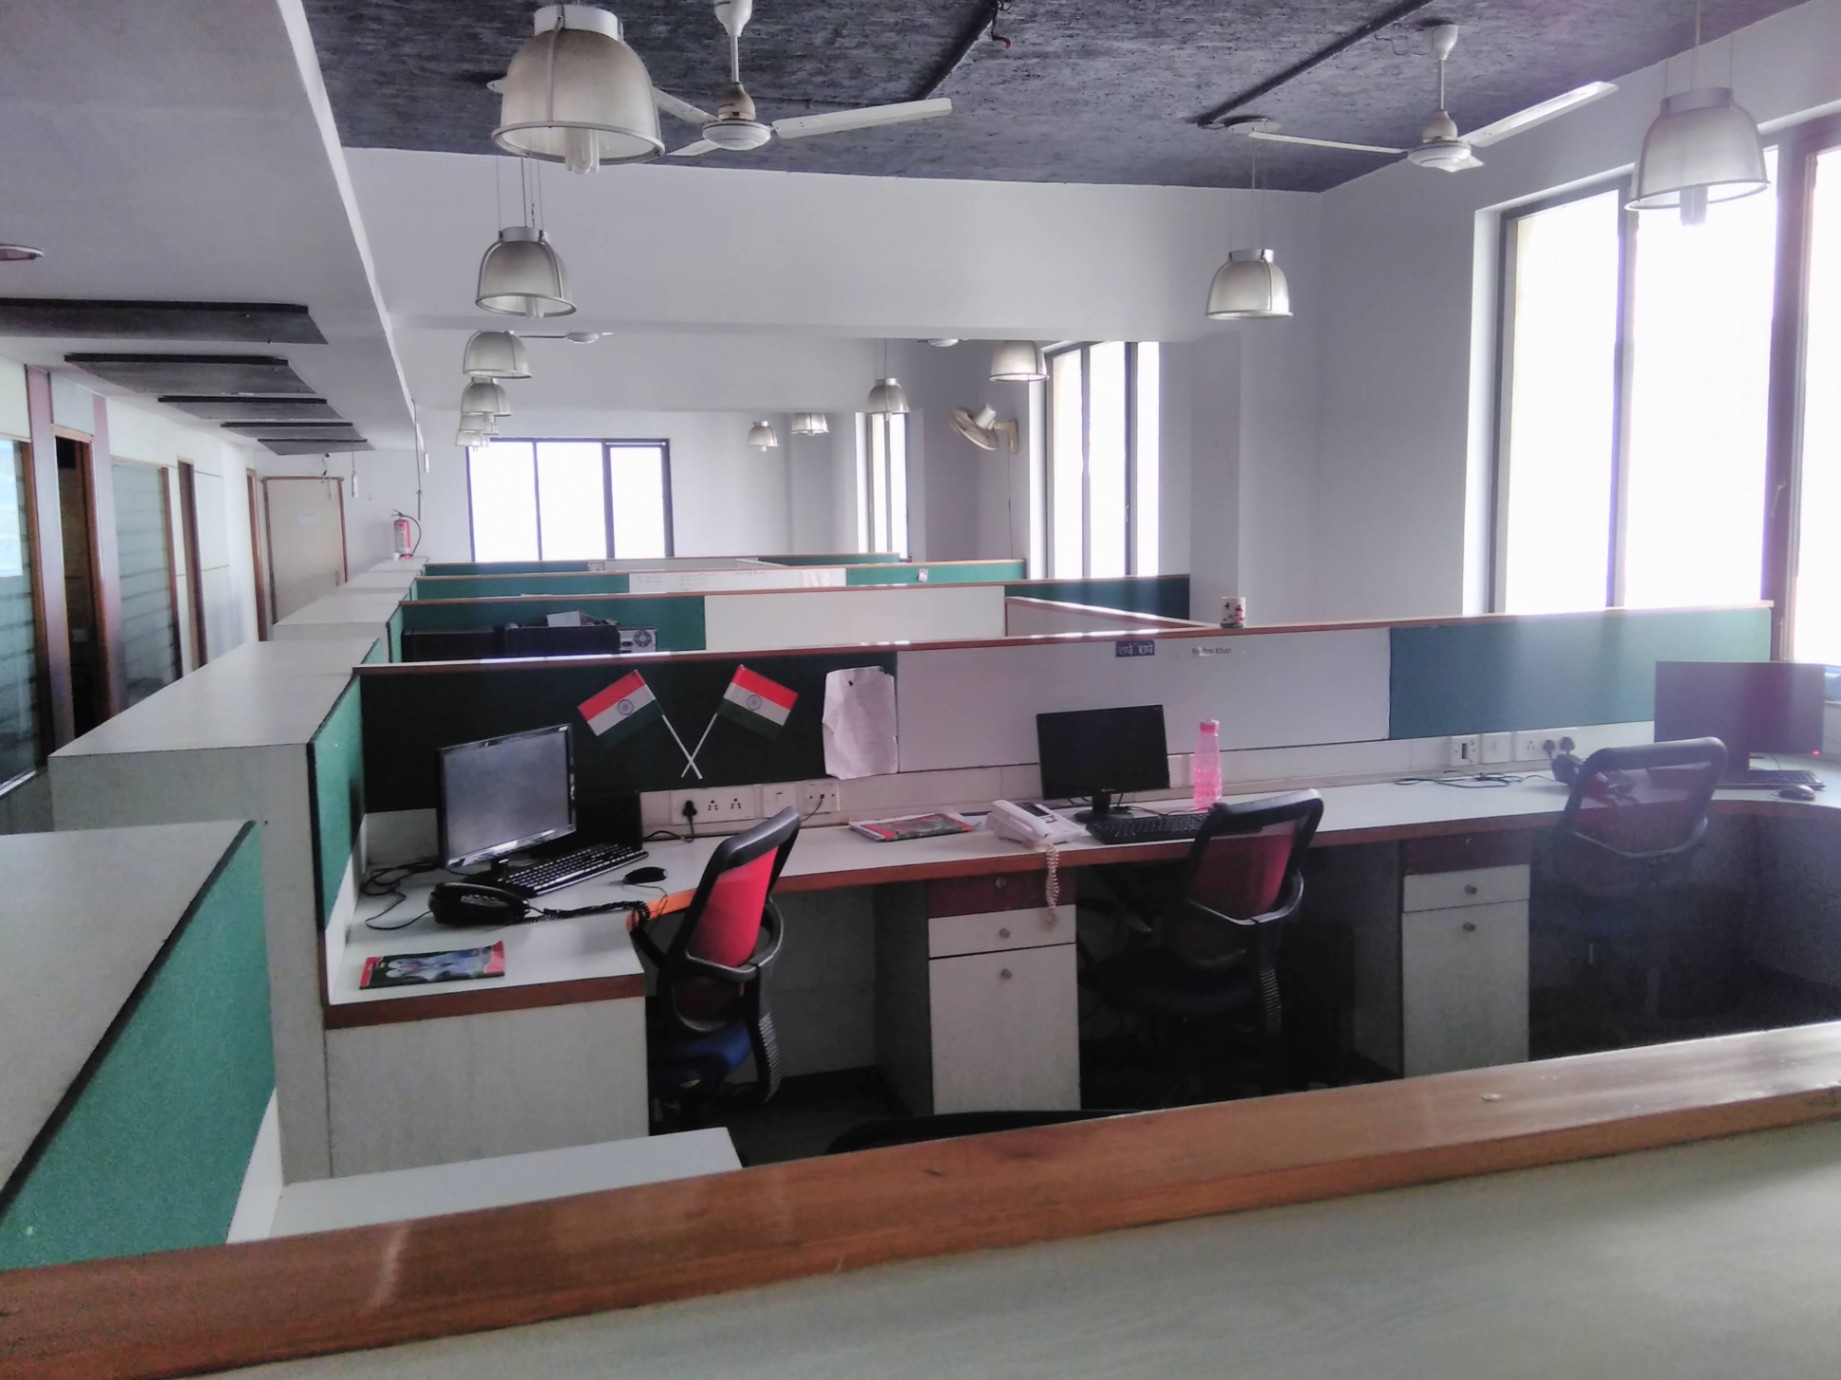 Rent Office/ Shop, 2750 sq ft carpet area, Furnished for rent @Sector 2 Noida